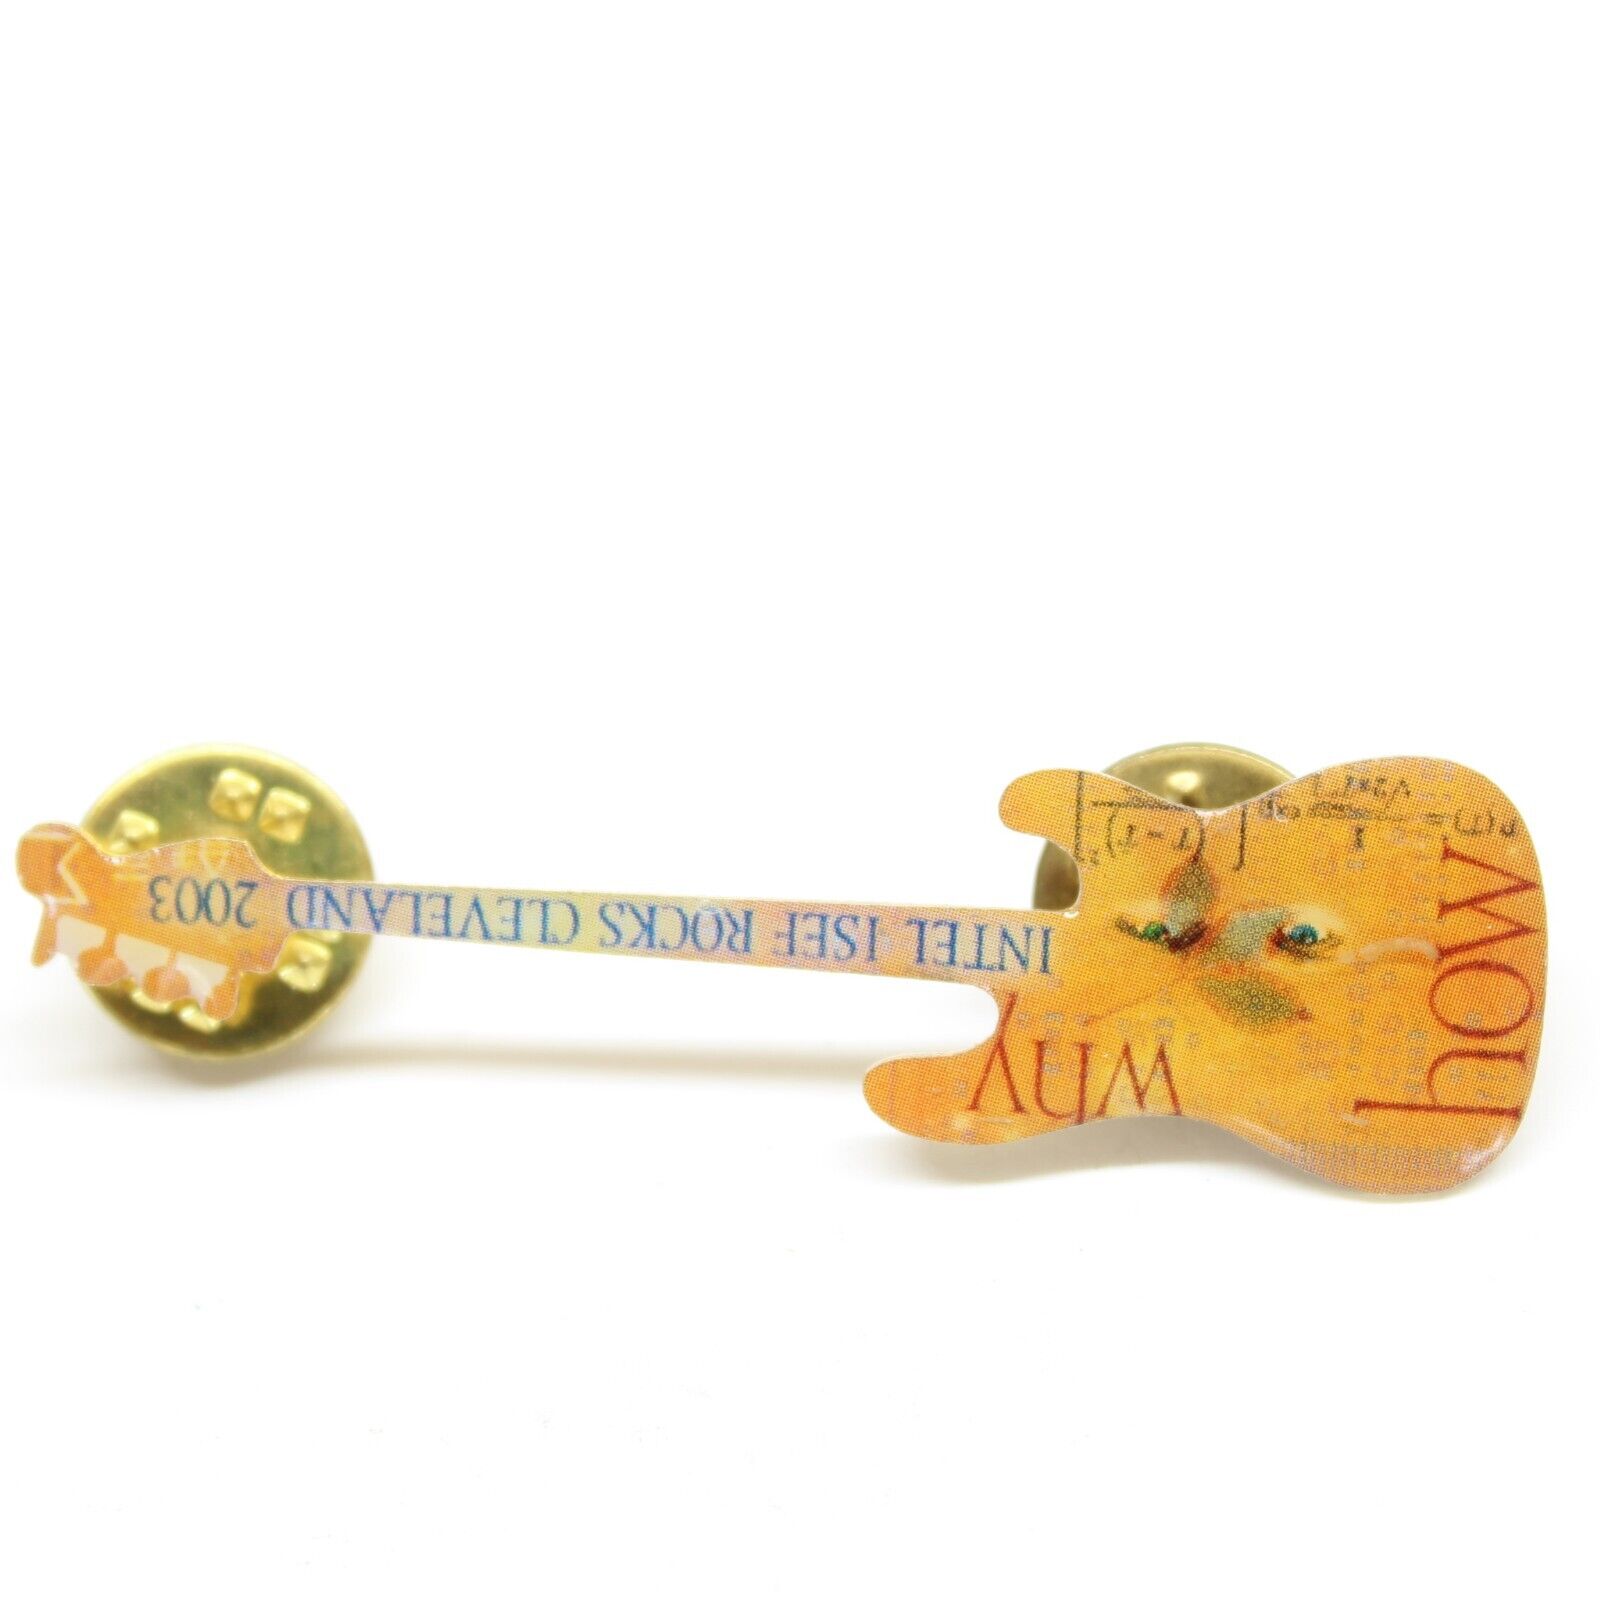 INTEL ISEF Rocks Cleveland 2003 Guitar Pin Lapel Enamel Collectible